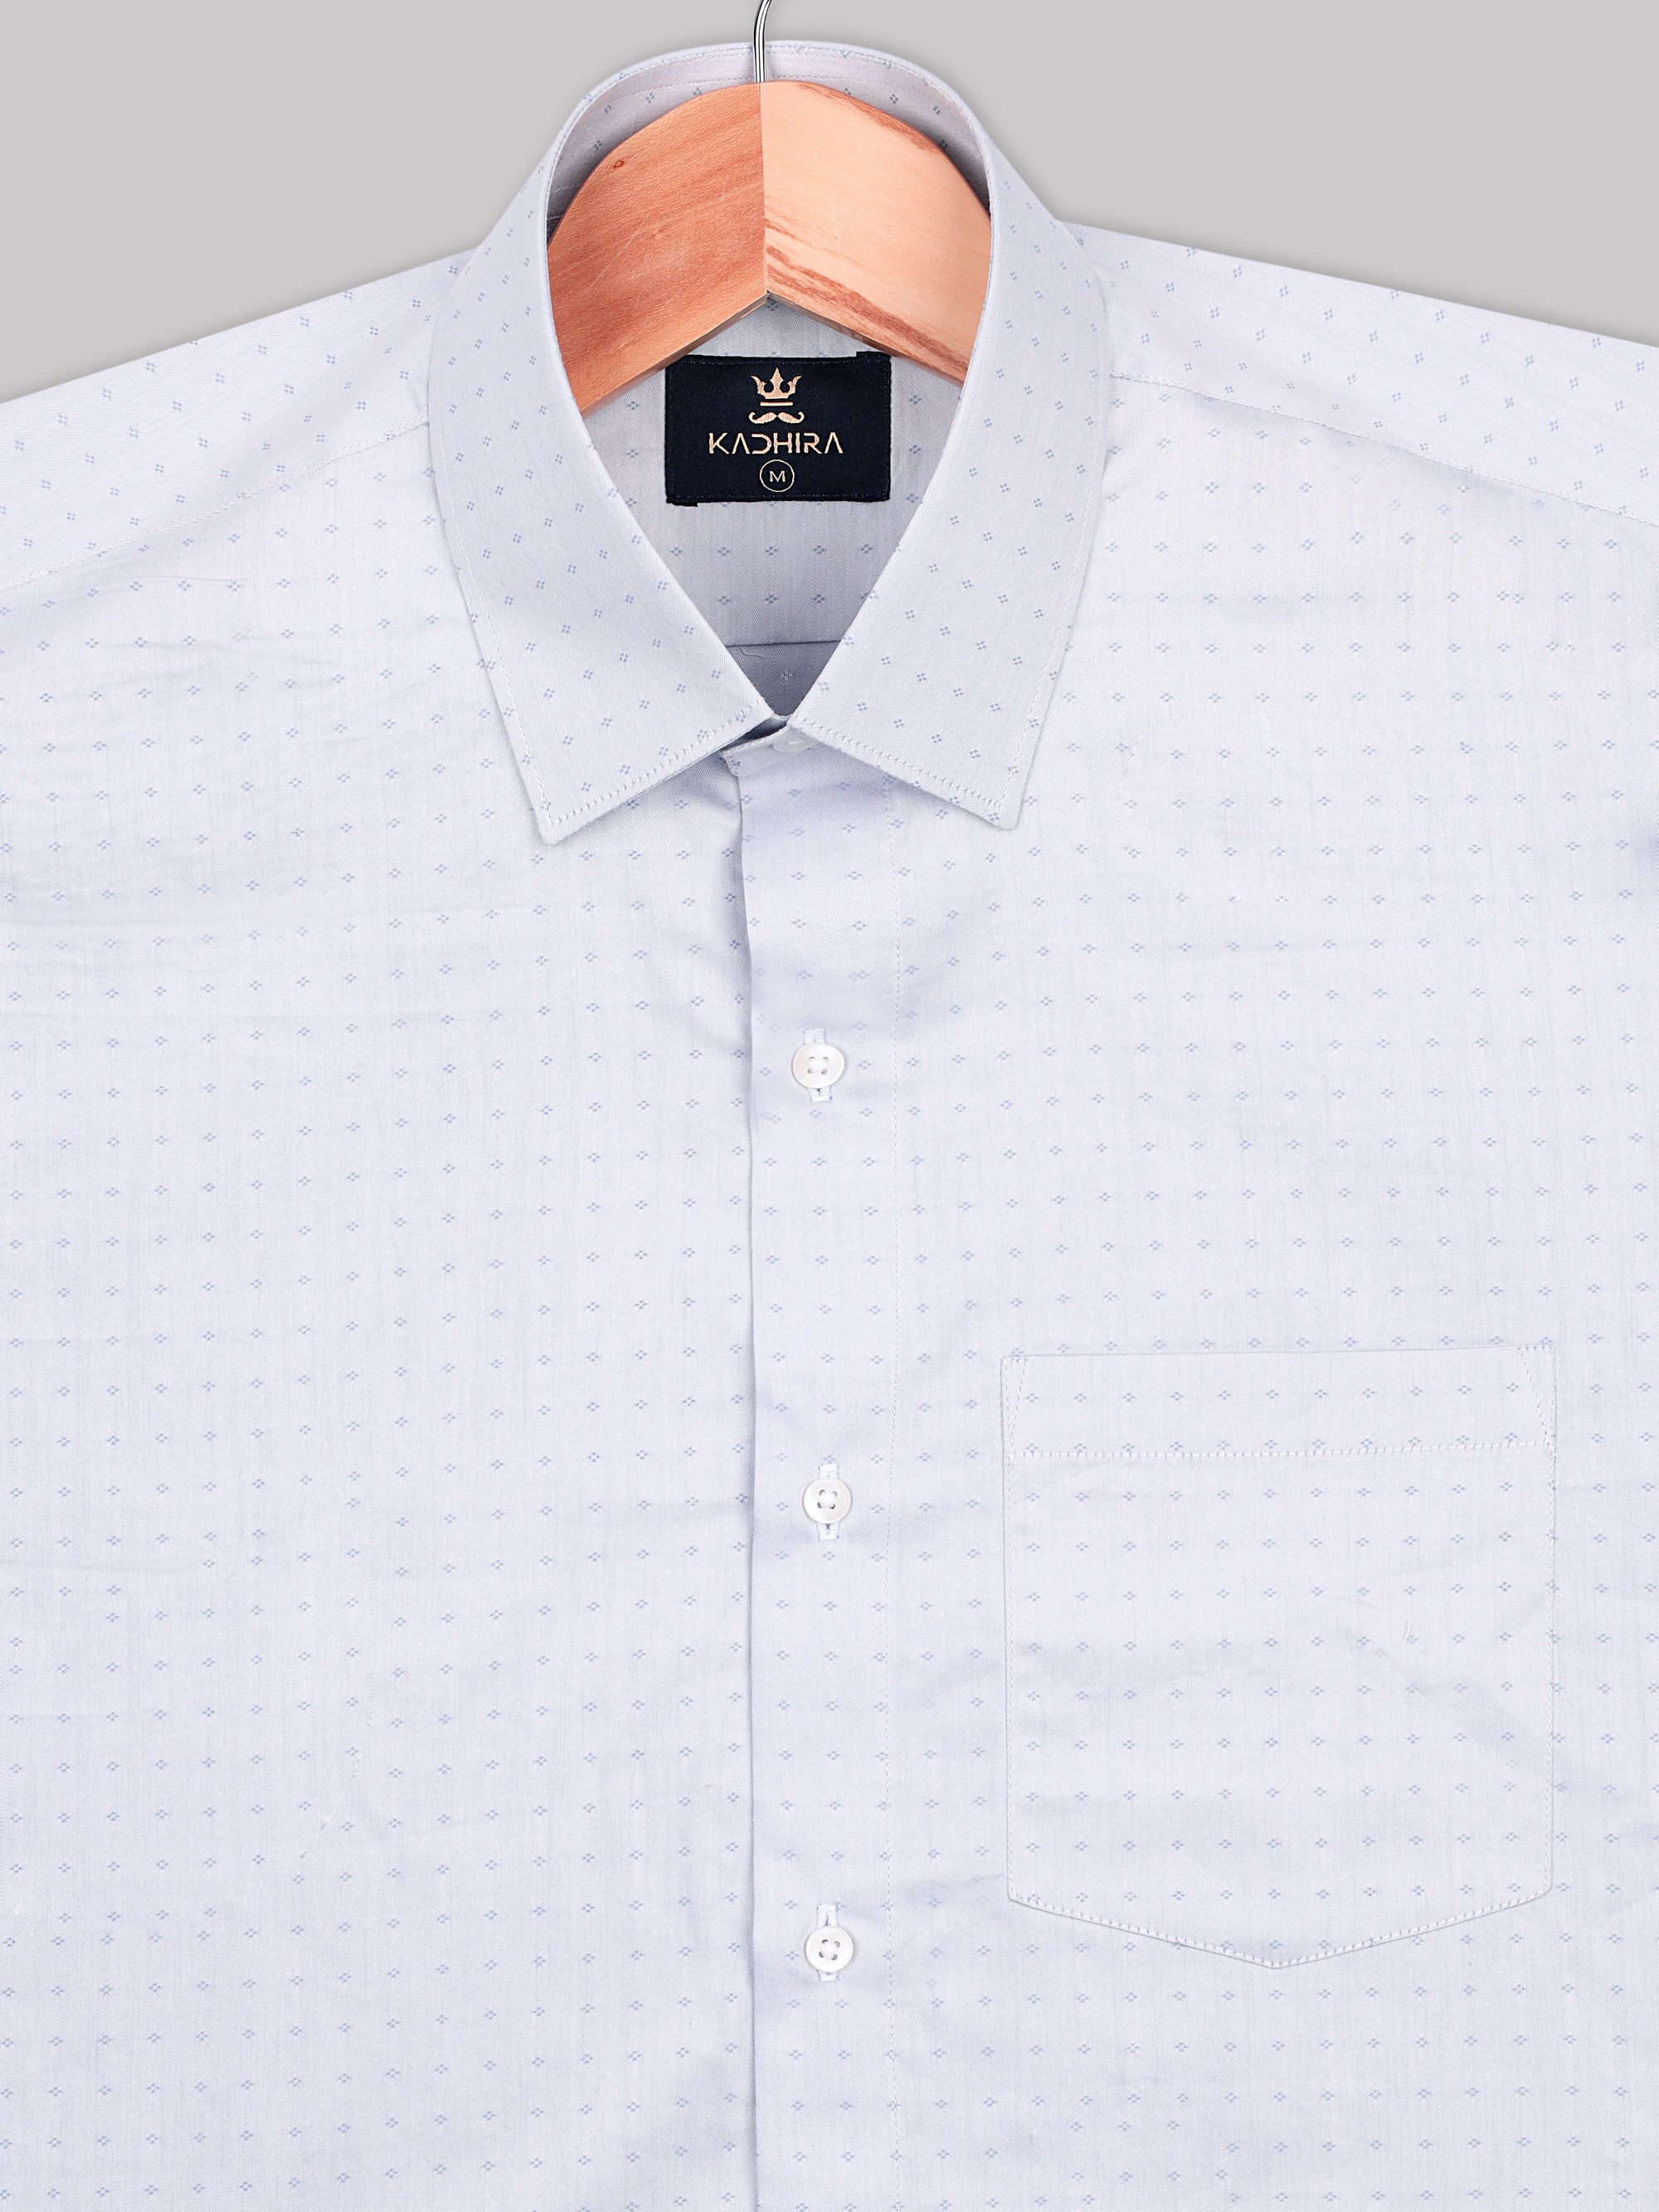 Platinum White Dobby Textured Jacquard Cotton Shirt